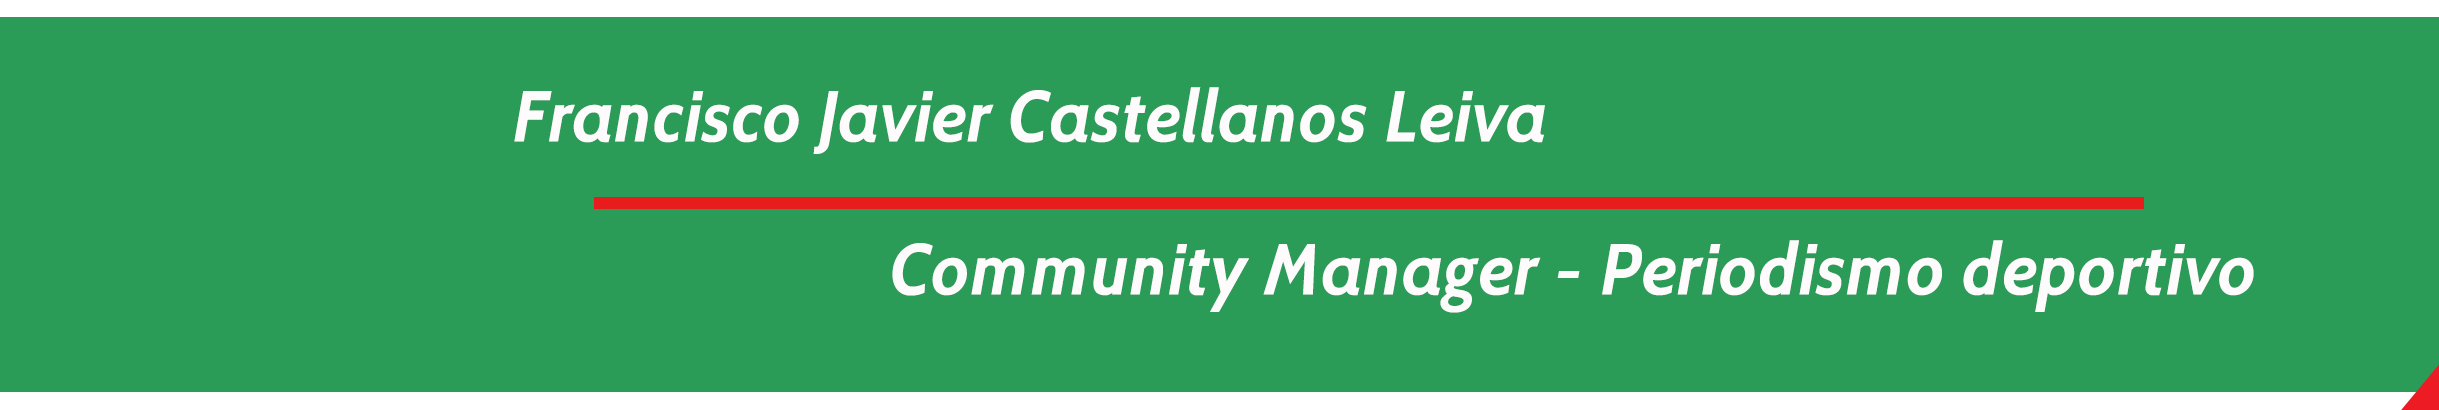 Francisco Javier Castellanos Leiva's profile banner